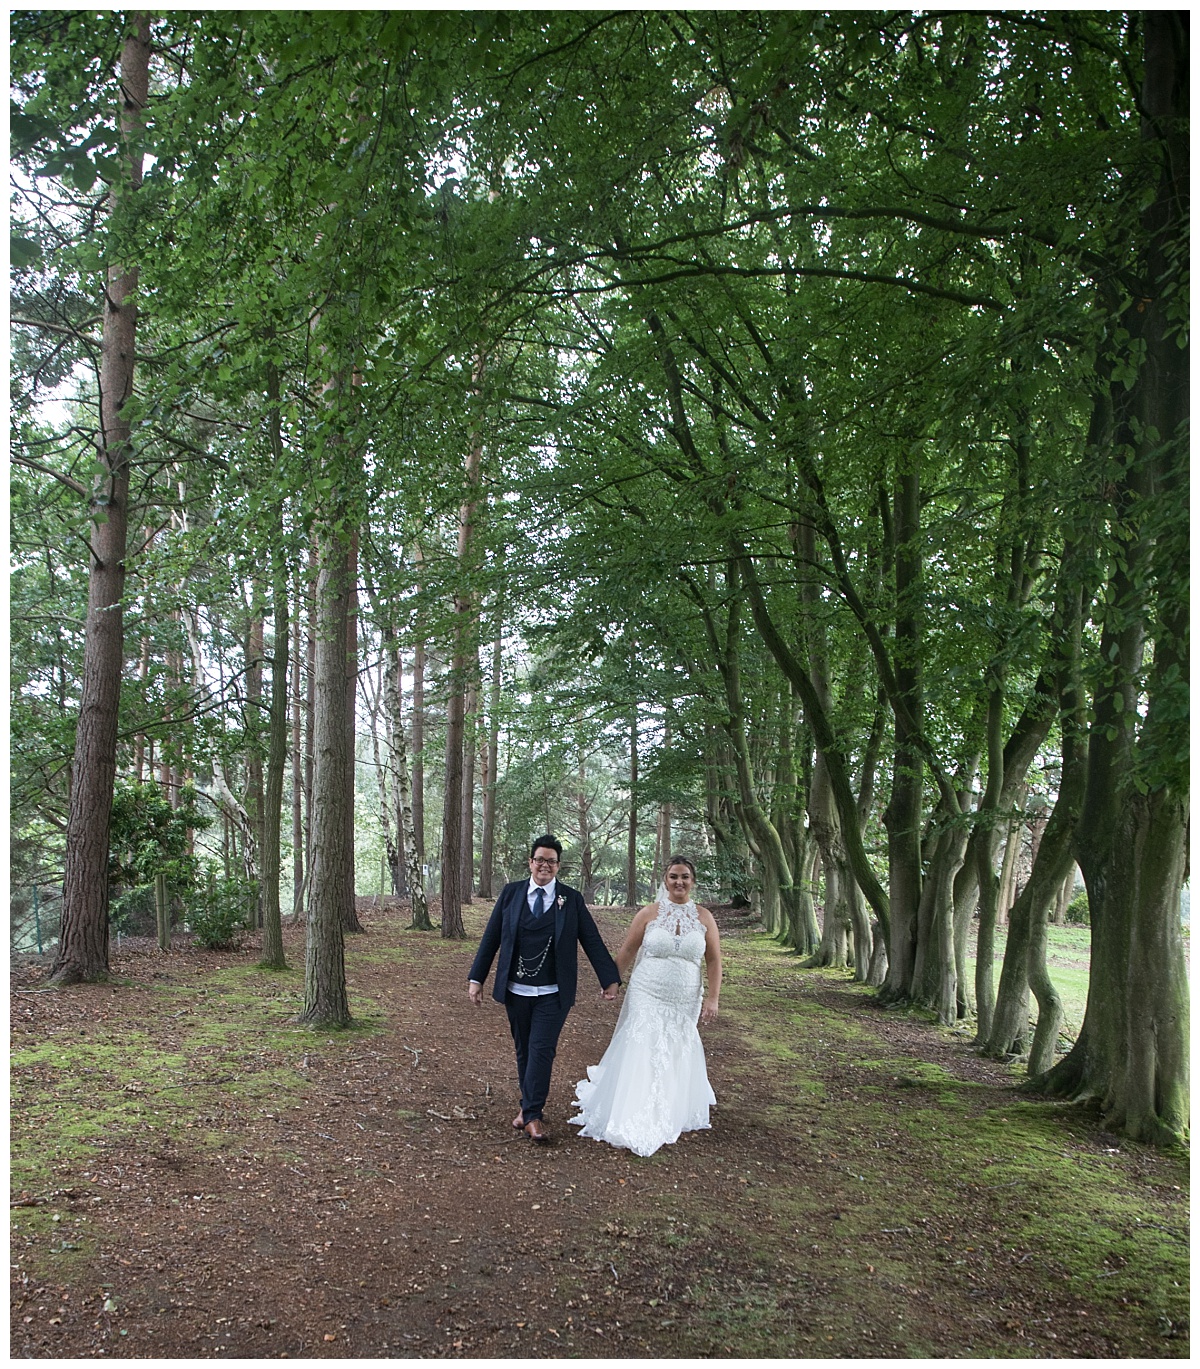 Wedding Photography Manchester - Nicky and Nichola's Nunsmere Hall Wedding Day 73